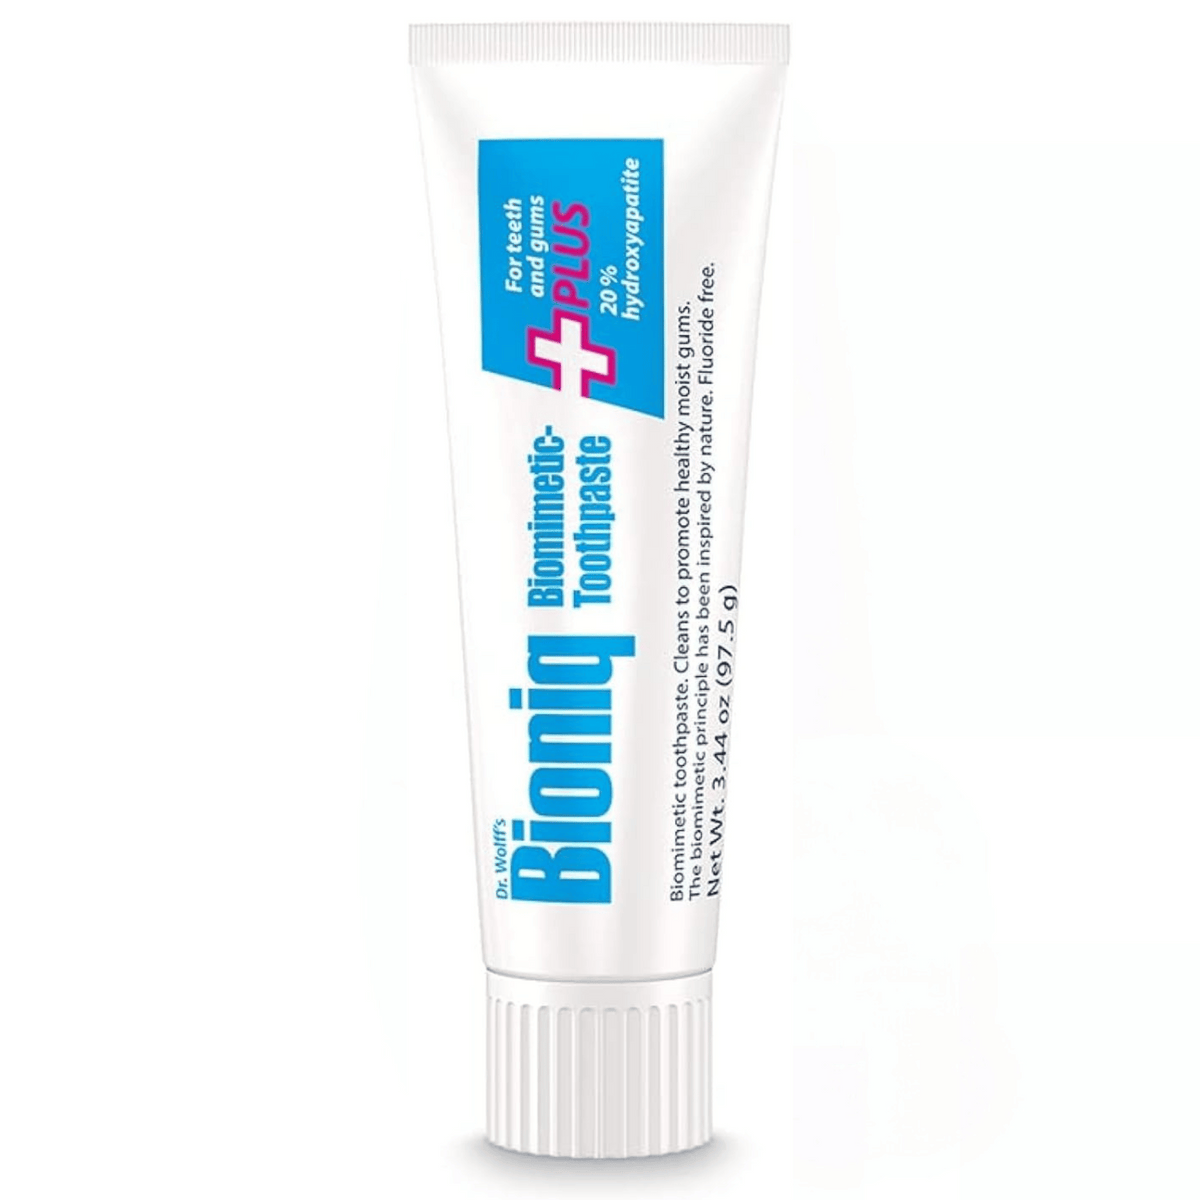 Primary Image of Biomimetic Toothpaste PLUS